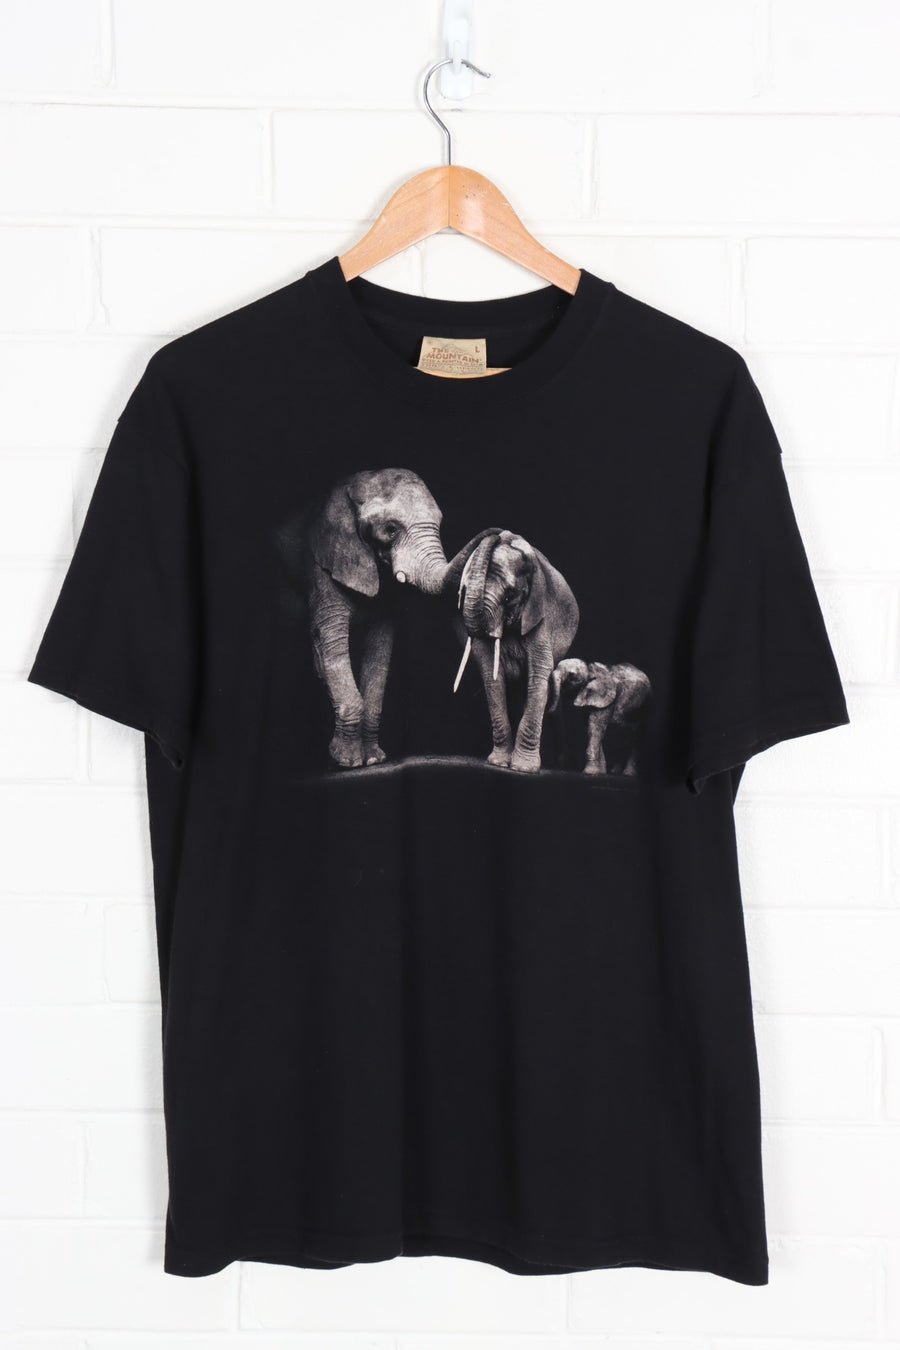 THE MOUNTAIN Elephants Animal Graphic Tee (M-L)